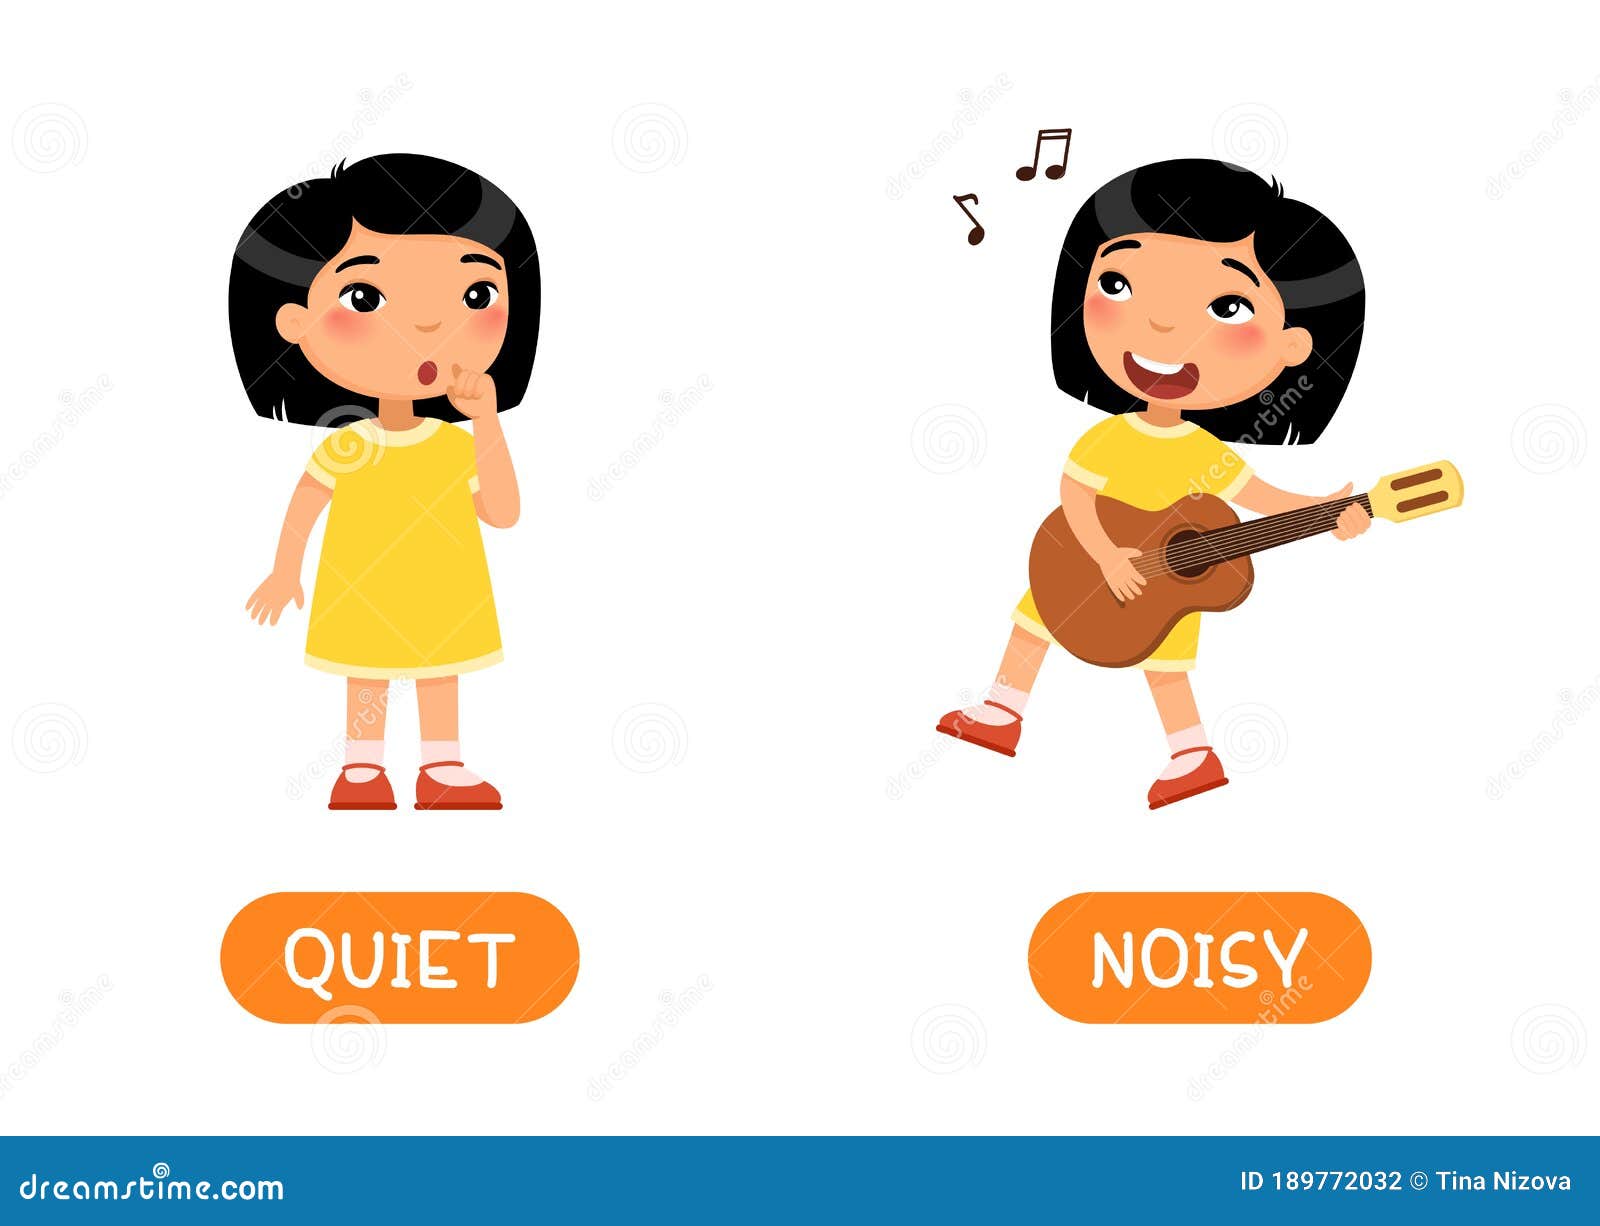 Adjectives noisy. Noisy quiet. Картинки Noisy quiet. Noisy картинка для детей. Громко и тихо иллюстрация.